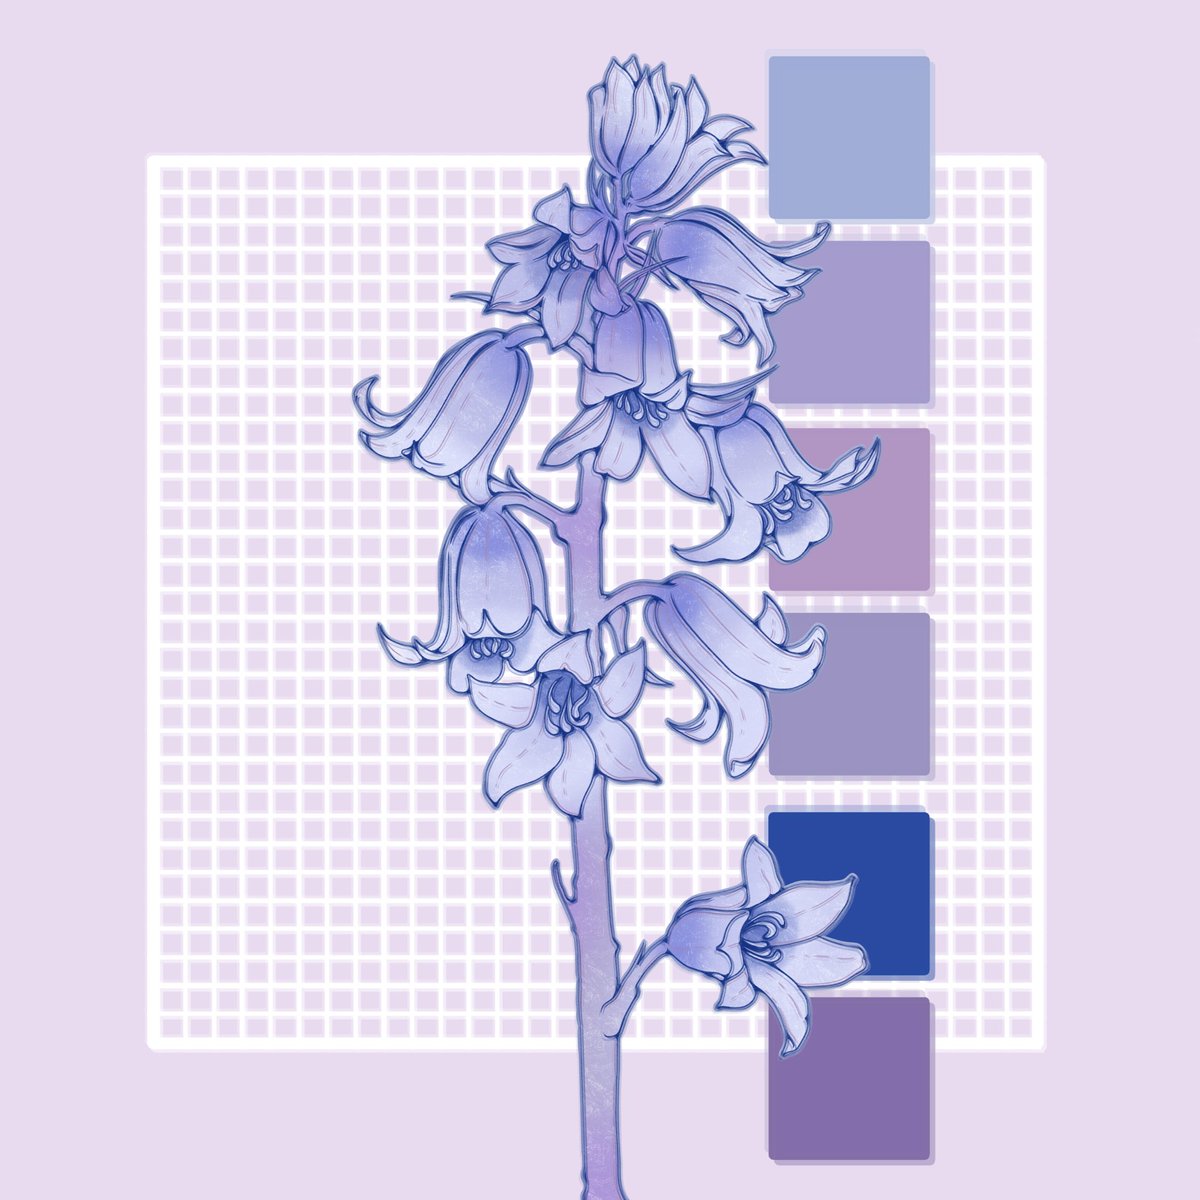 “Bluebell at Dawn” cc. 03/01/2023
—
#art #artoftheday #design #dessin #drawing #digitalart #autodesksketchbook #illustration #illust #torontoartist #アート #イラスト #絵 #아트 #그림 #일러스트 #bluebell #flowers #print